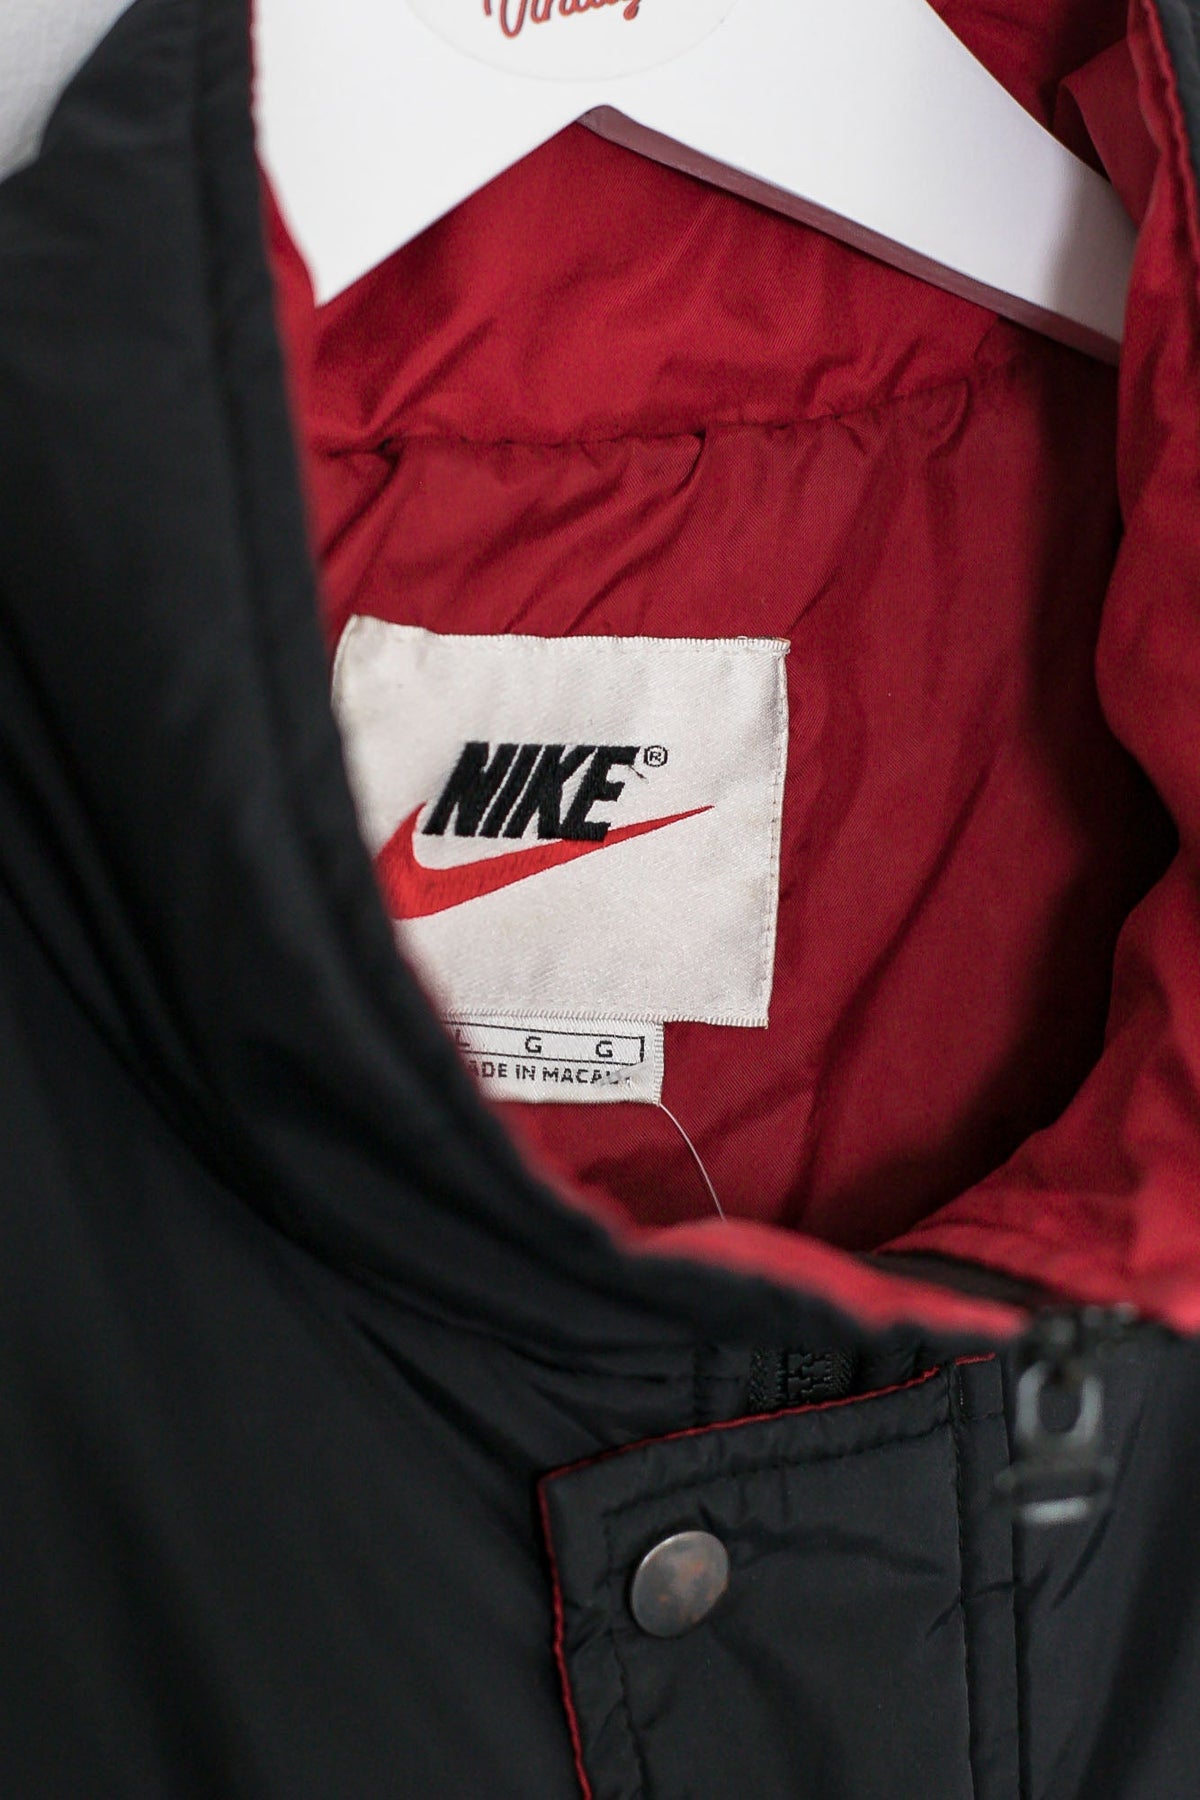 90s Nike Puffer Jacket (L)